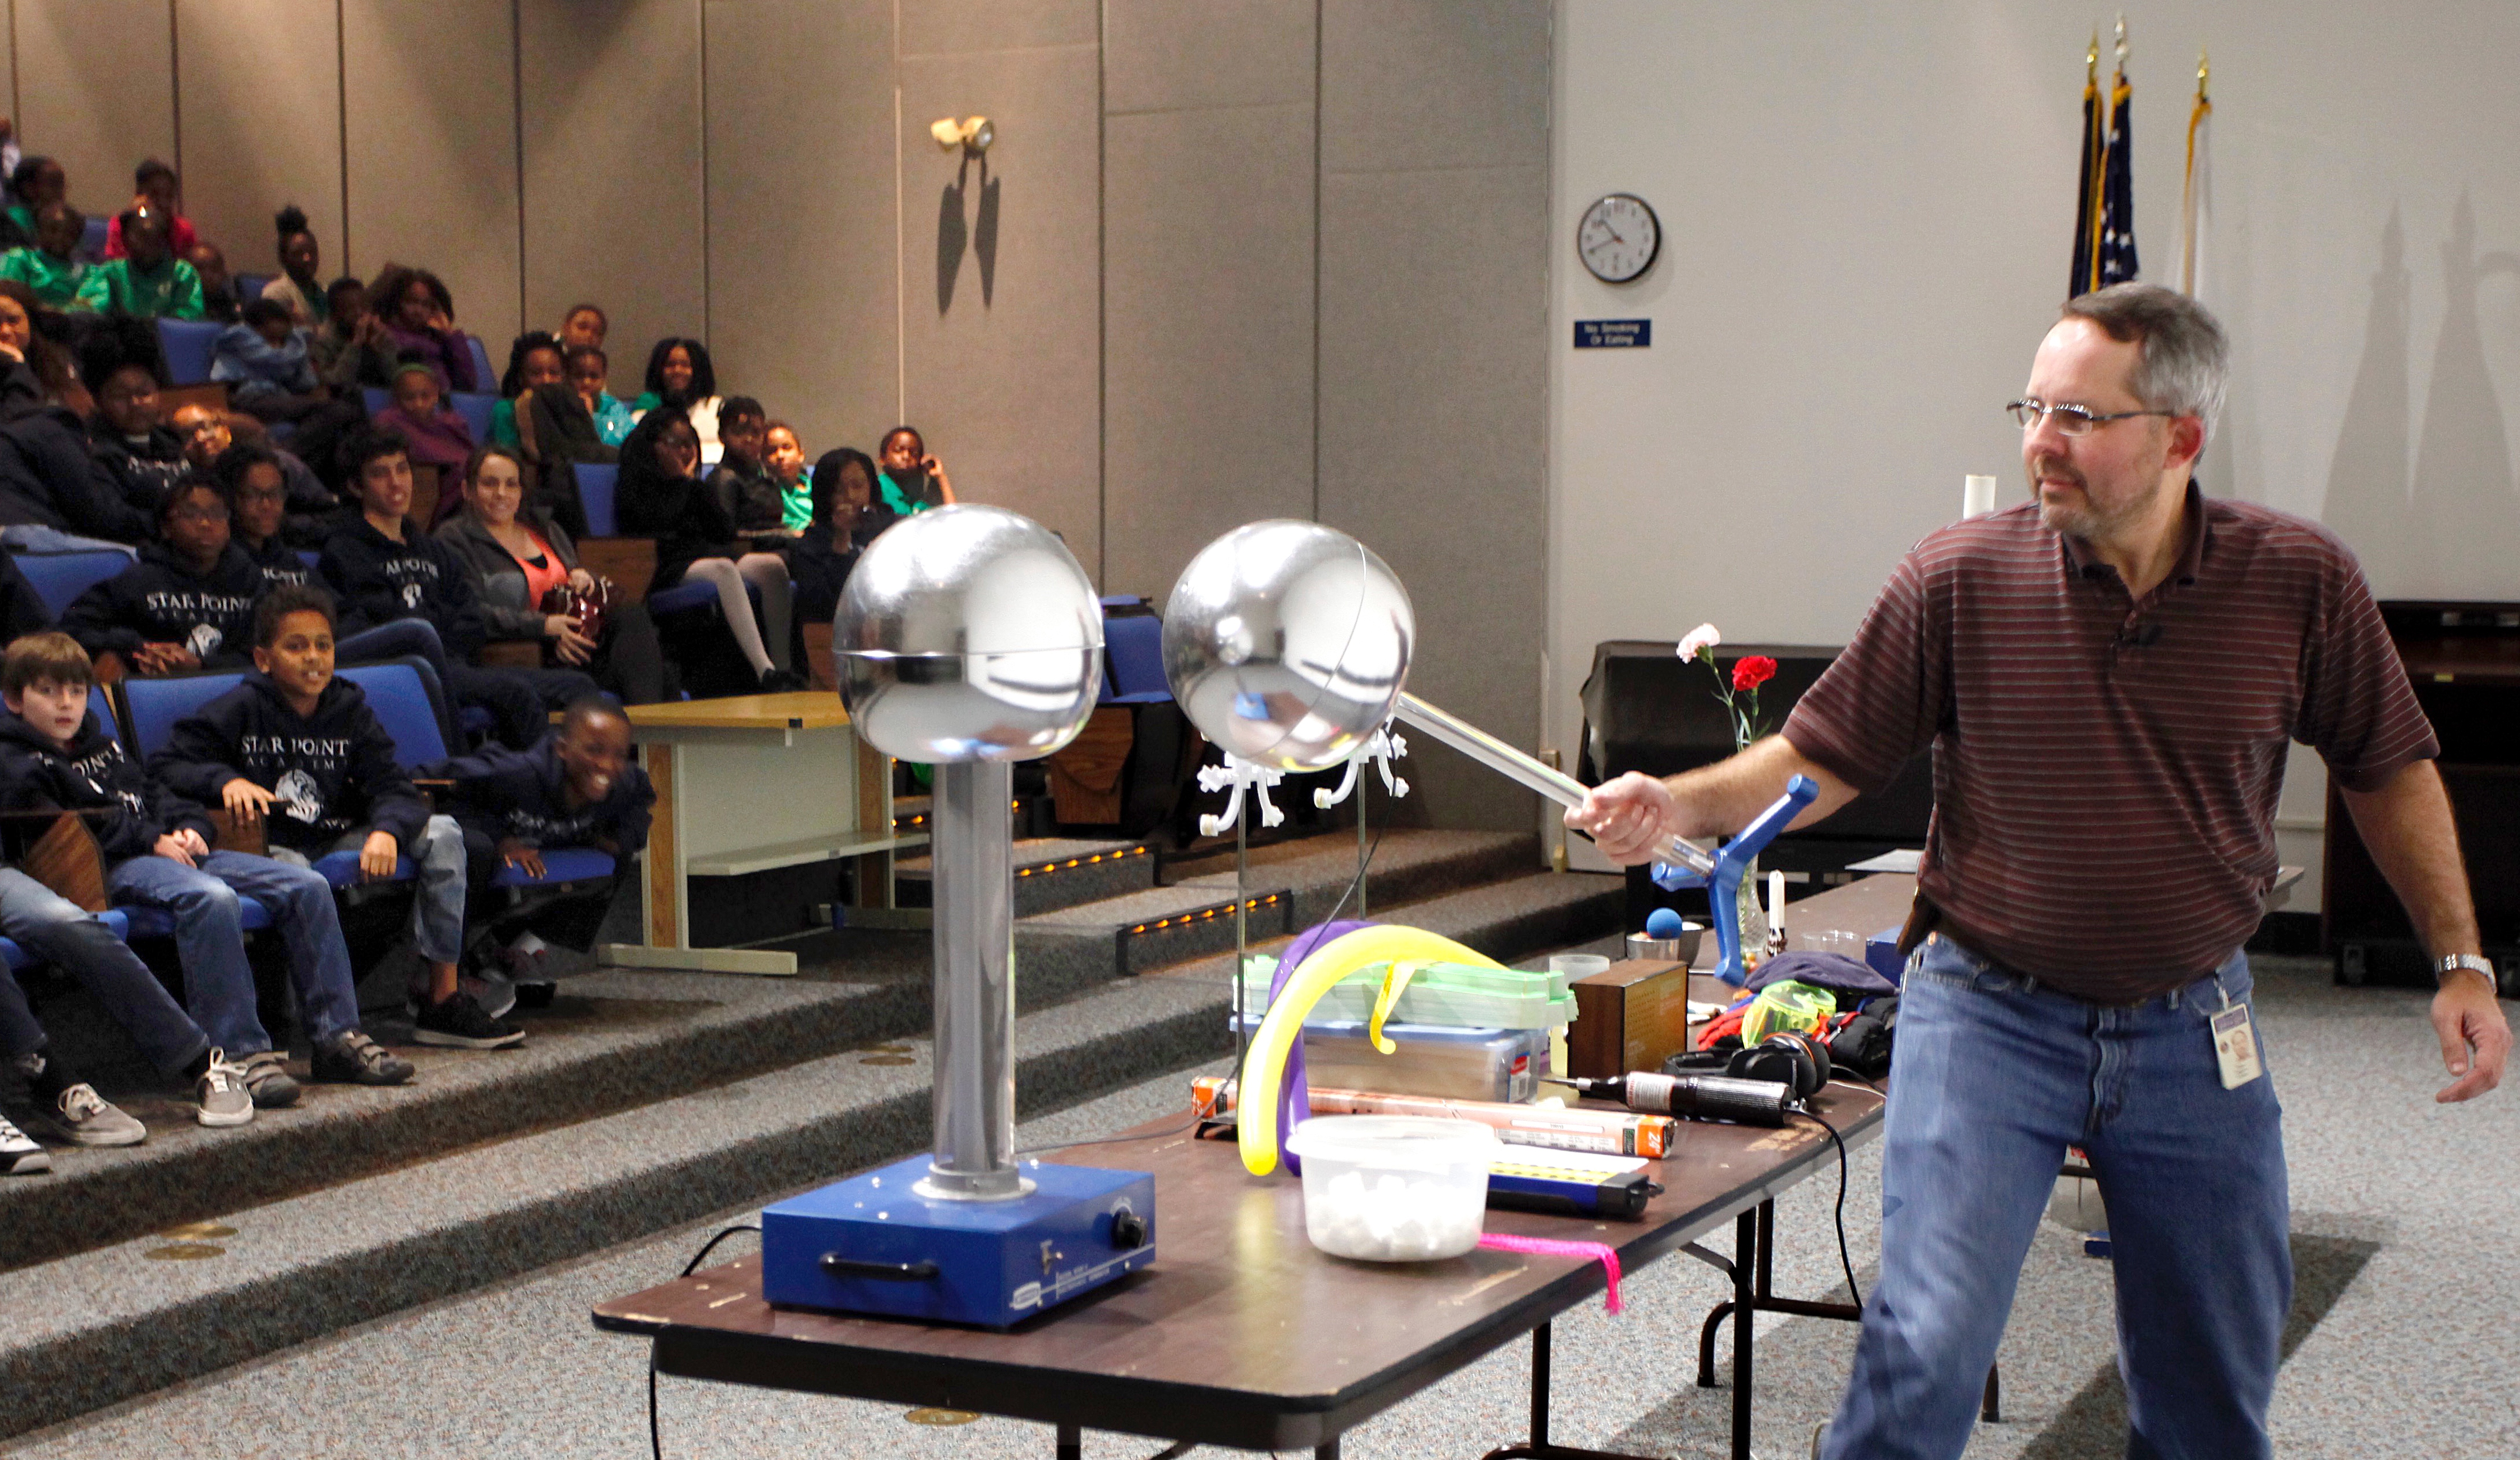 Jefferson Lab’s Steve Gagnon prepares to give an “electrifying” demonstration, using a Van de Graff generator during a Physics Fest program.